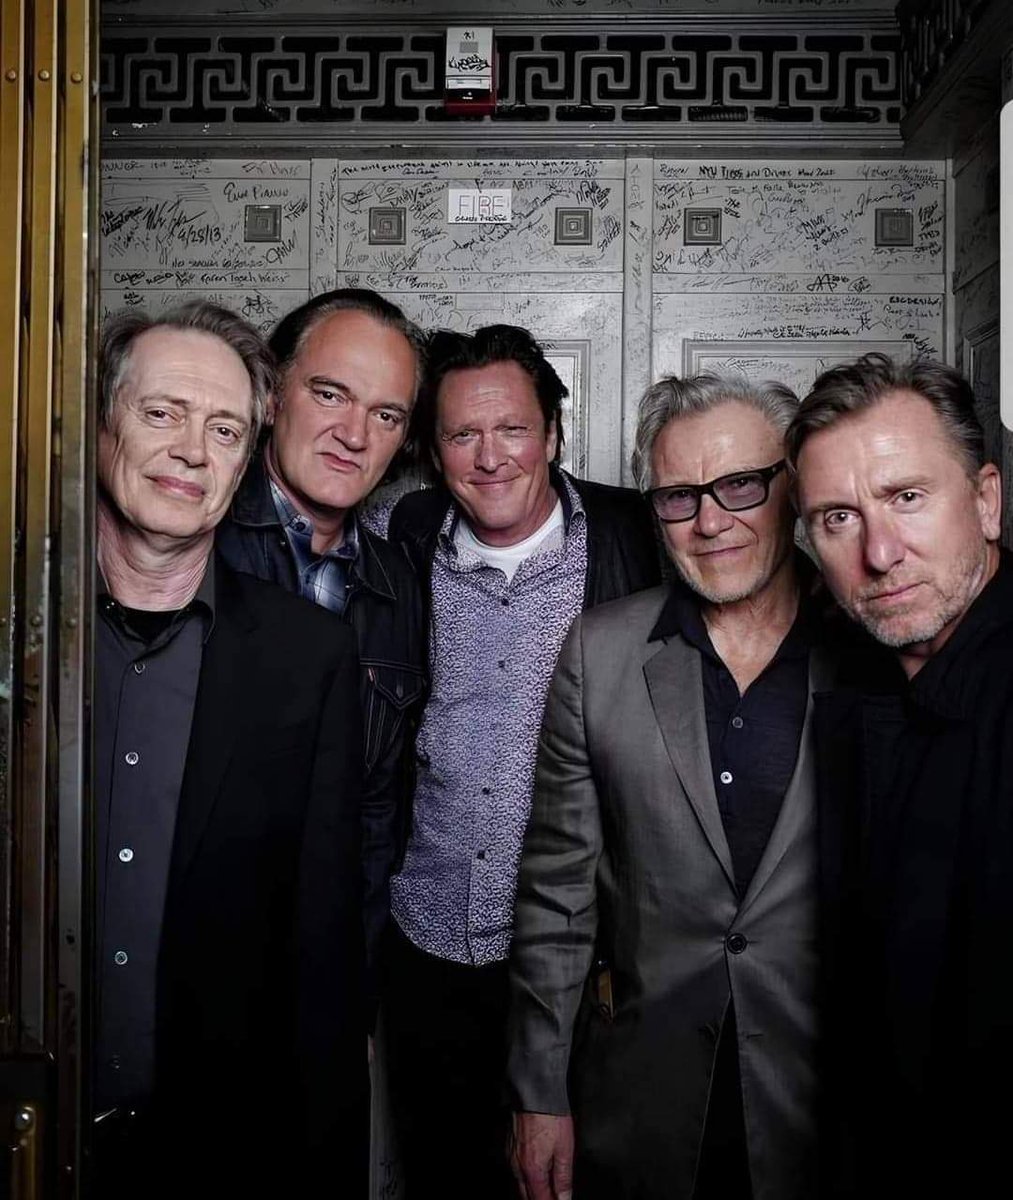 Steve Buscemi (Mr. Pink),Quentin Tarantino (Mr. Brown),Michael Madsen (Mr. Blonde),Harvey Keitel (Mr. White) ,Tim Roth (Mr. Orange).
#ReservoirDogs #LeIene #cultmovies